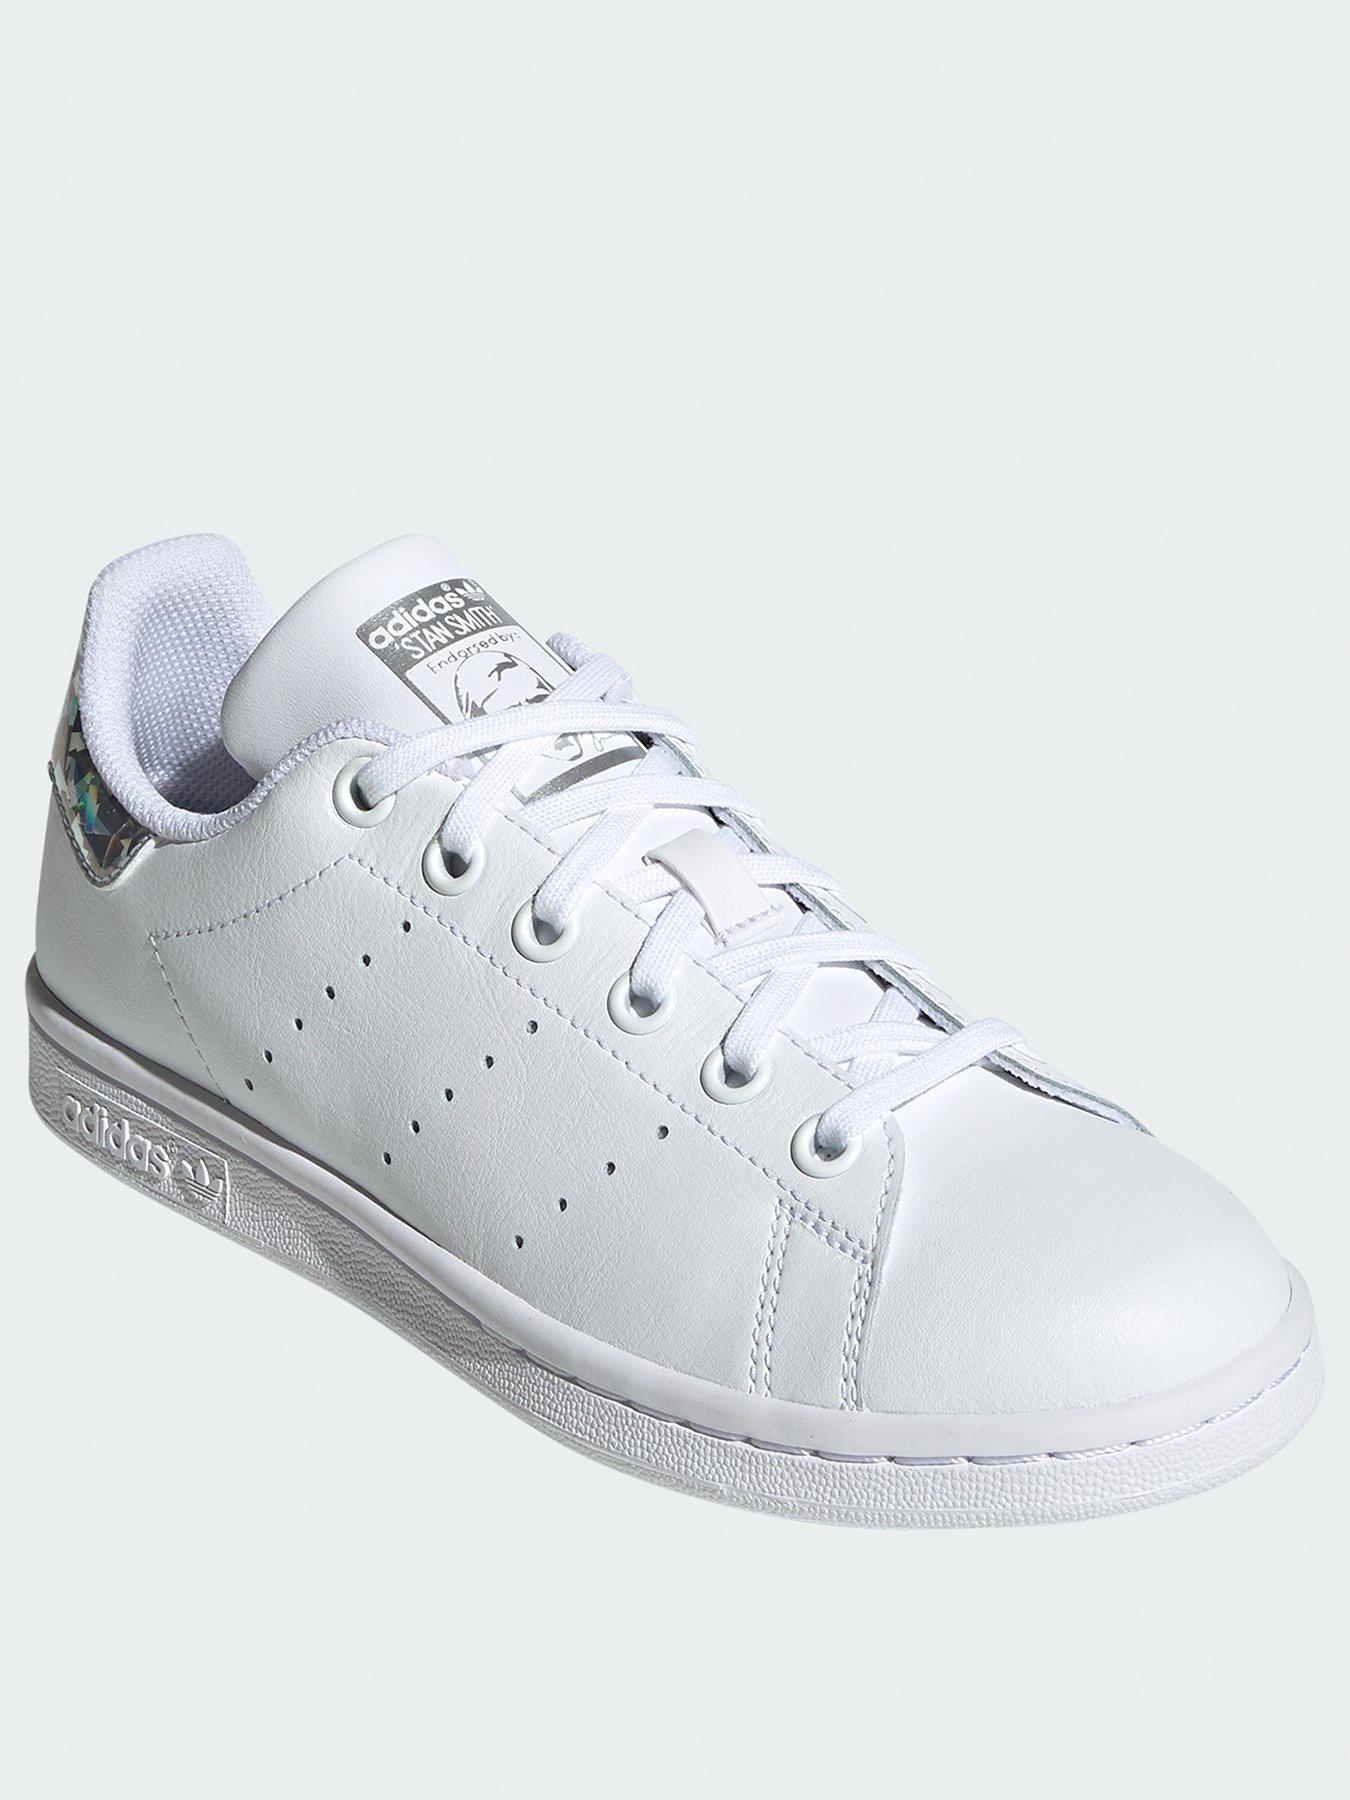 adidas junior white trainers